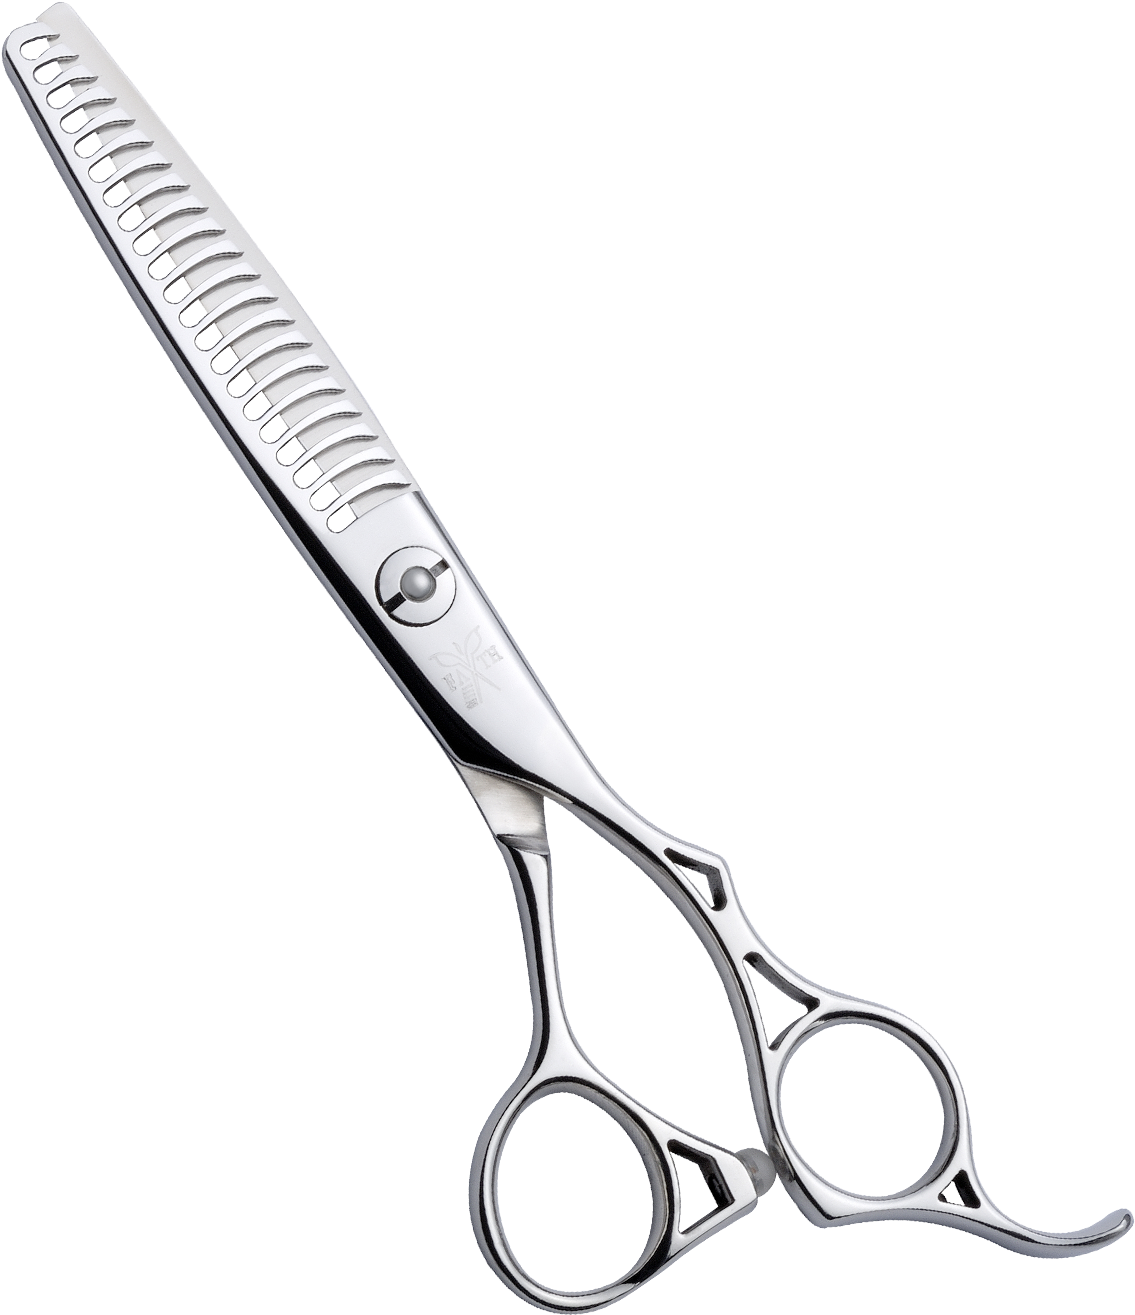 Ss-21 Barber Thinning Scissors - Scissors (1167x1500), Png Download